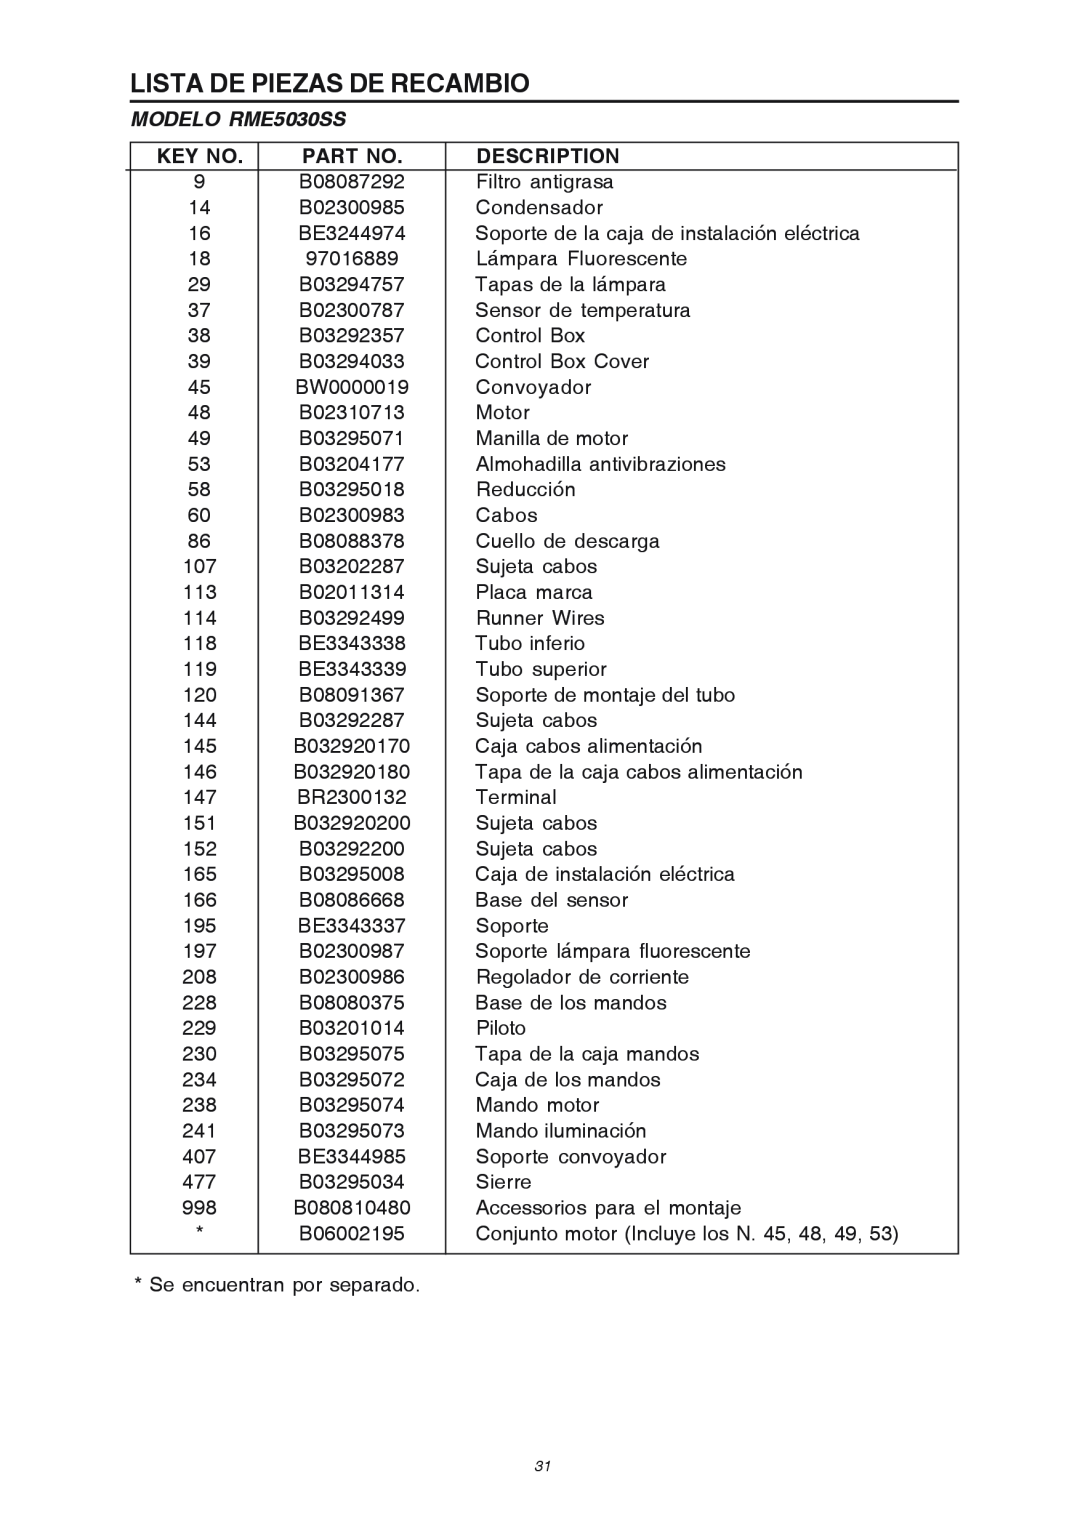 Broan RME50000 manual Lista De Piezas De Recambio, MODELO RME5030SS, Description 